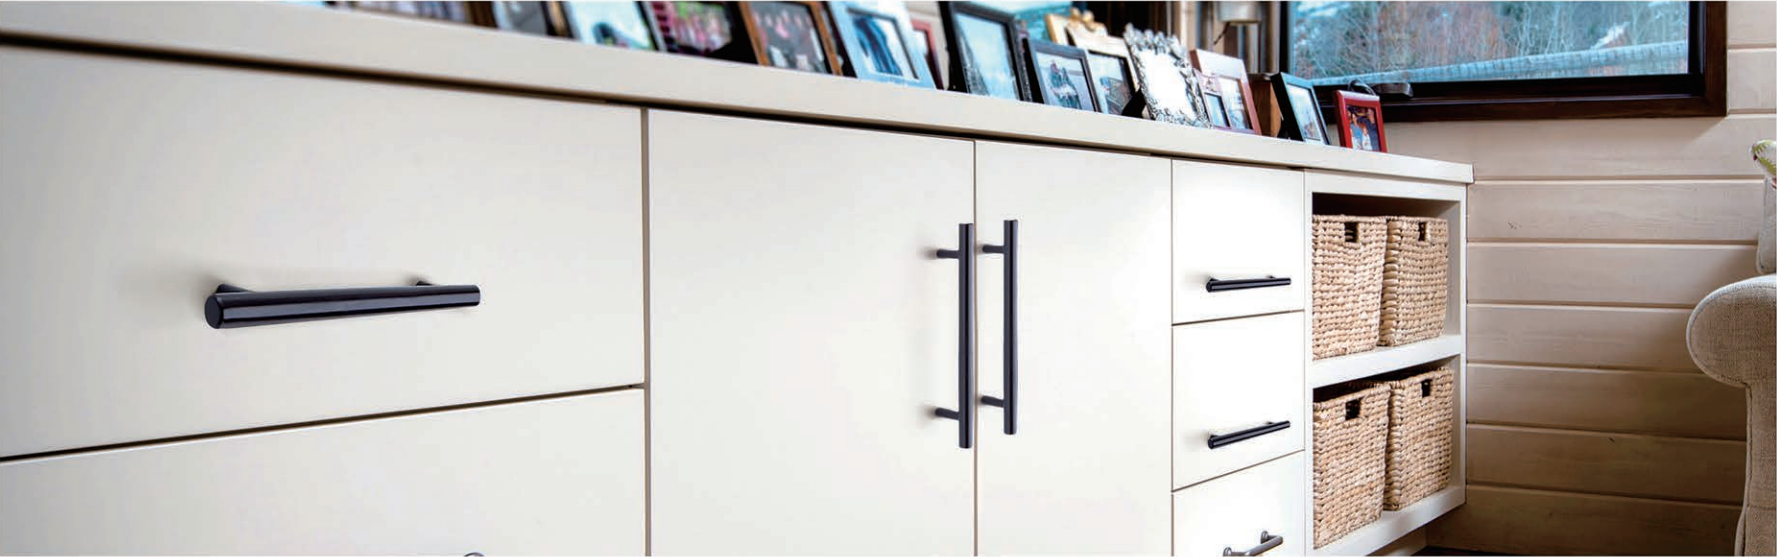 KOPPALIVE Promotion Luxury Modern Design Bedroom Copper Furniture Cabinet Brass Pull Handles